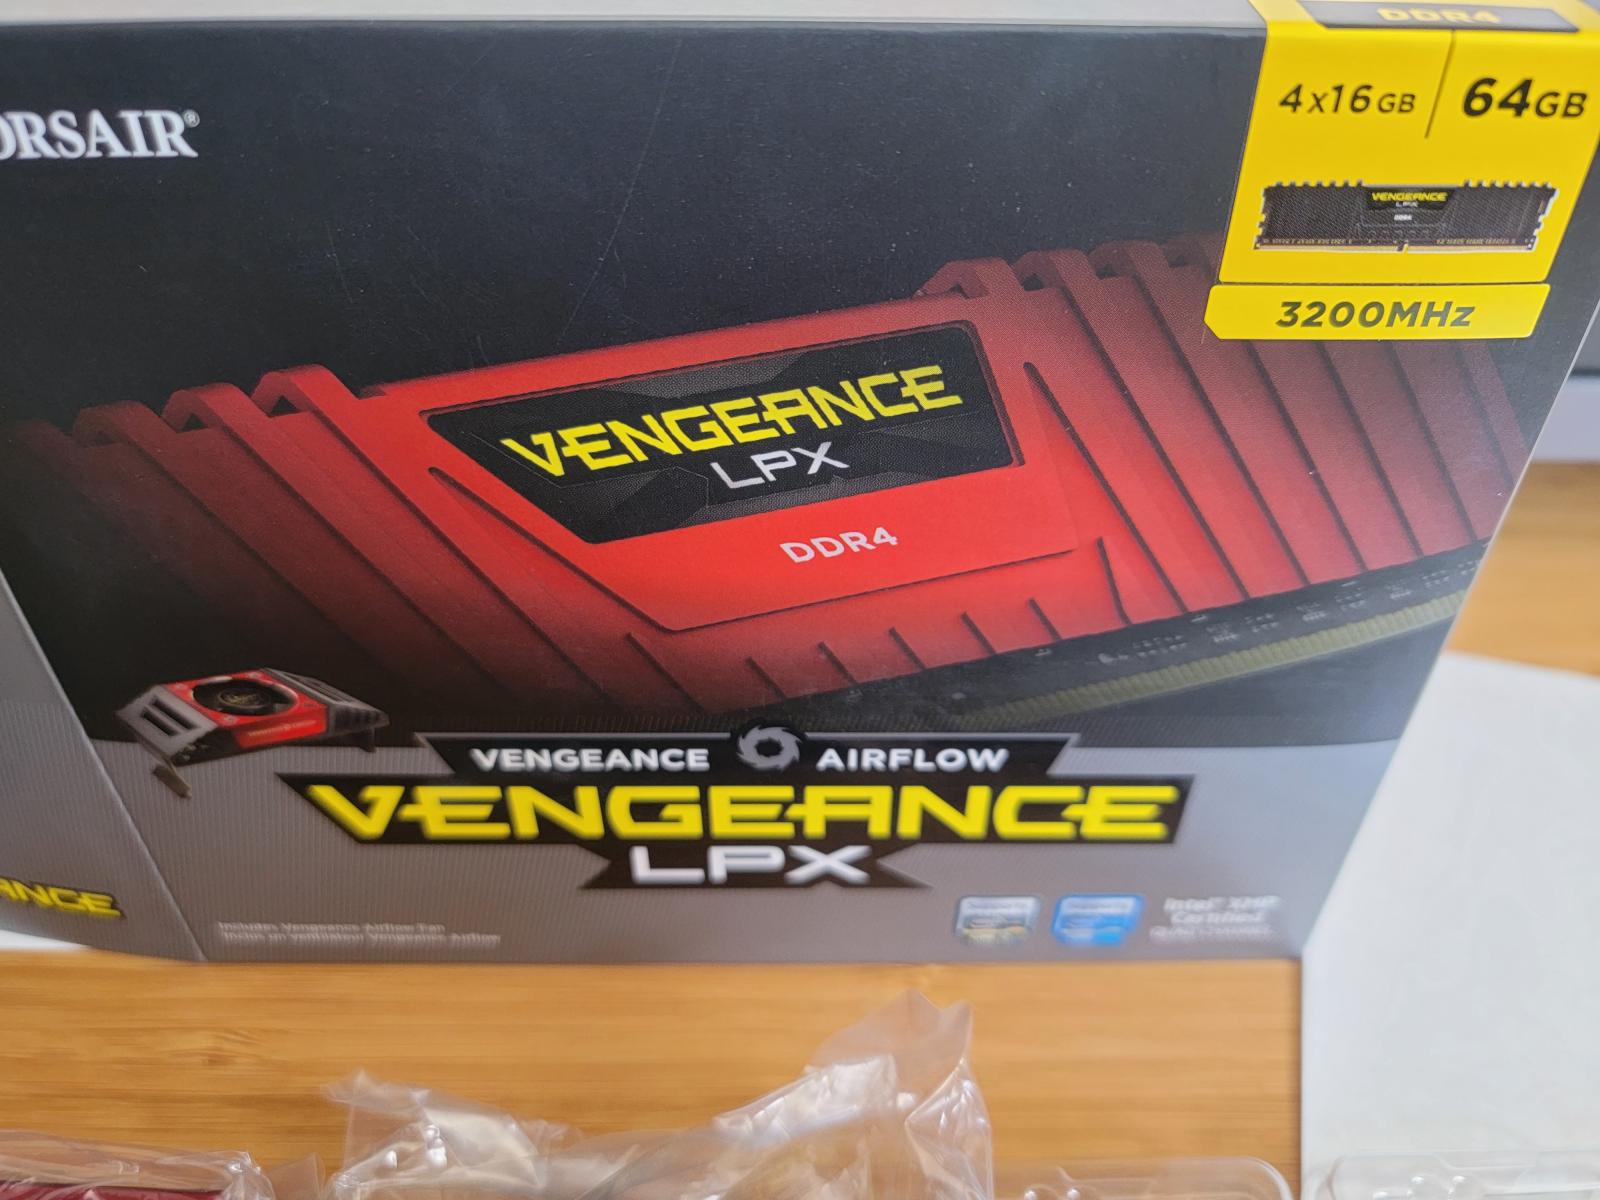 For sale Corsair Vengeance LPX & Airflow 64GB (4x16GB) DDR4 3200MHz RAM kit (B-die)